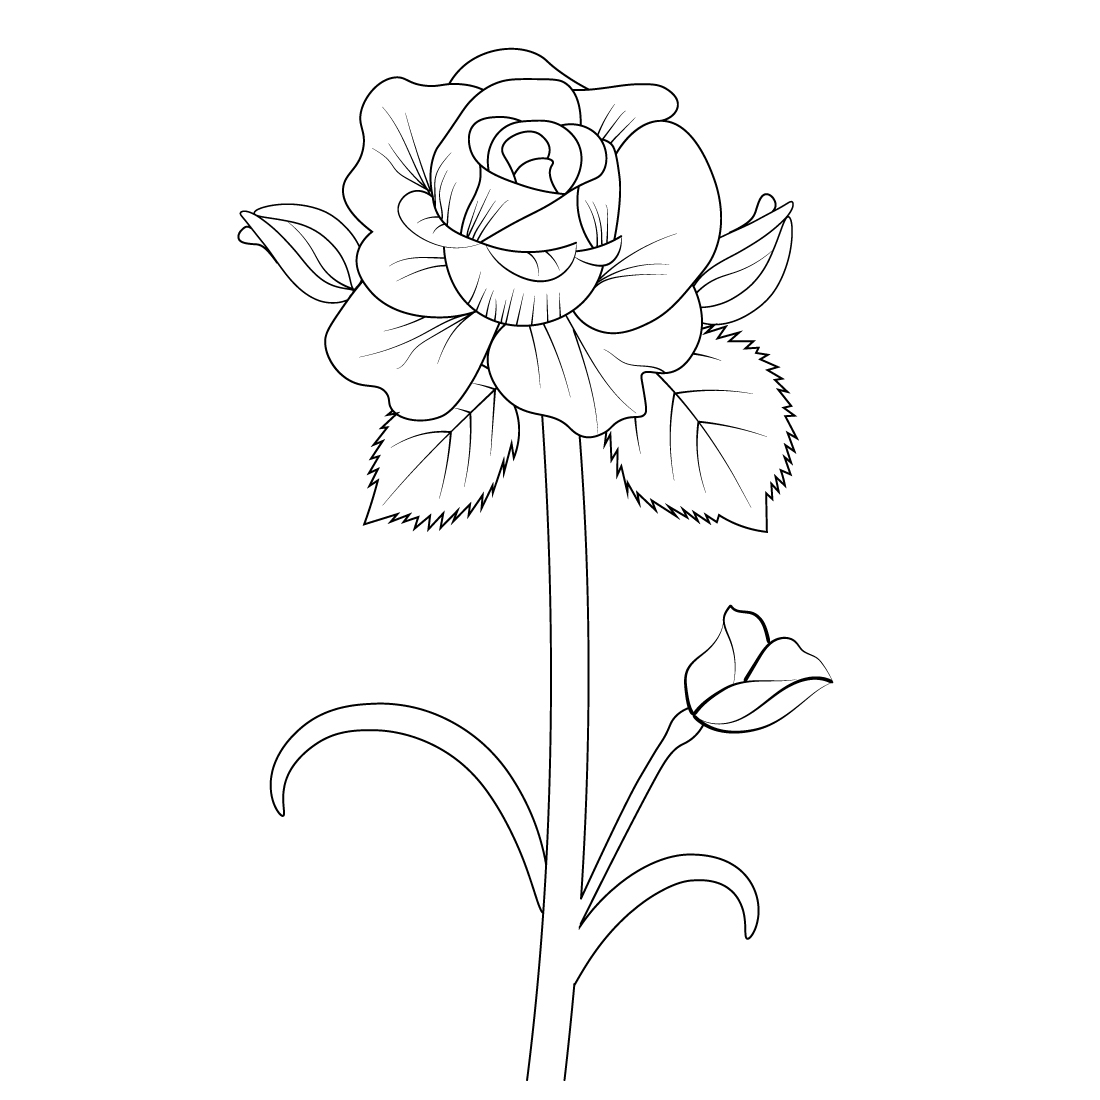 How to Draw a Flower Very Easy - YouTube-saigonsouth.com.vn